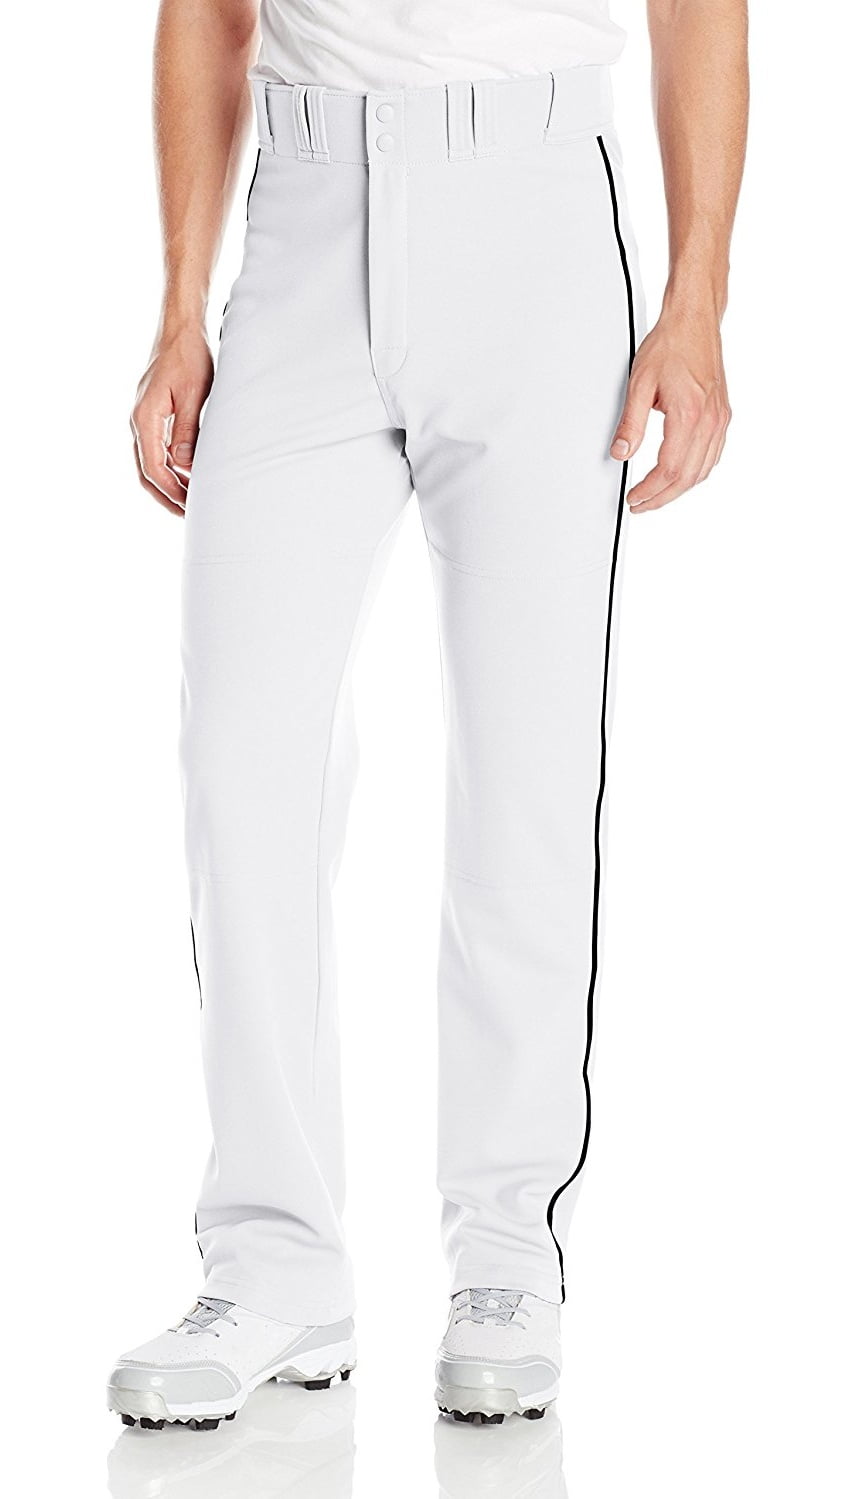 Piping Easton Mako 2 Adult Men's Piped Baseball Pants White & Grey Long 